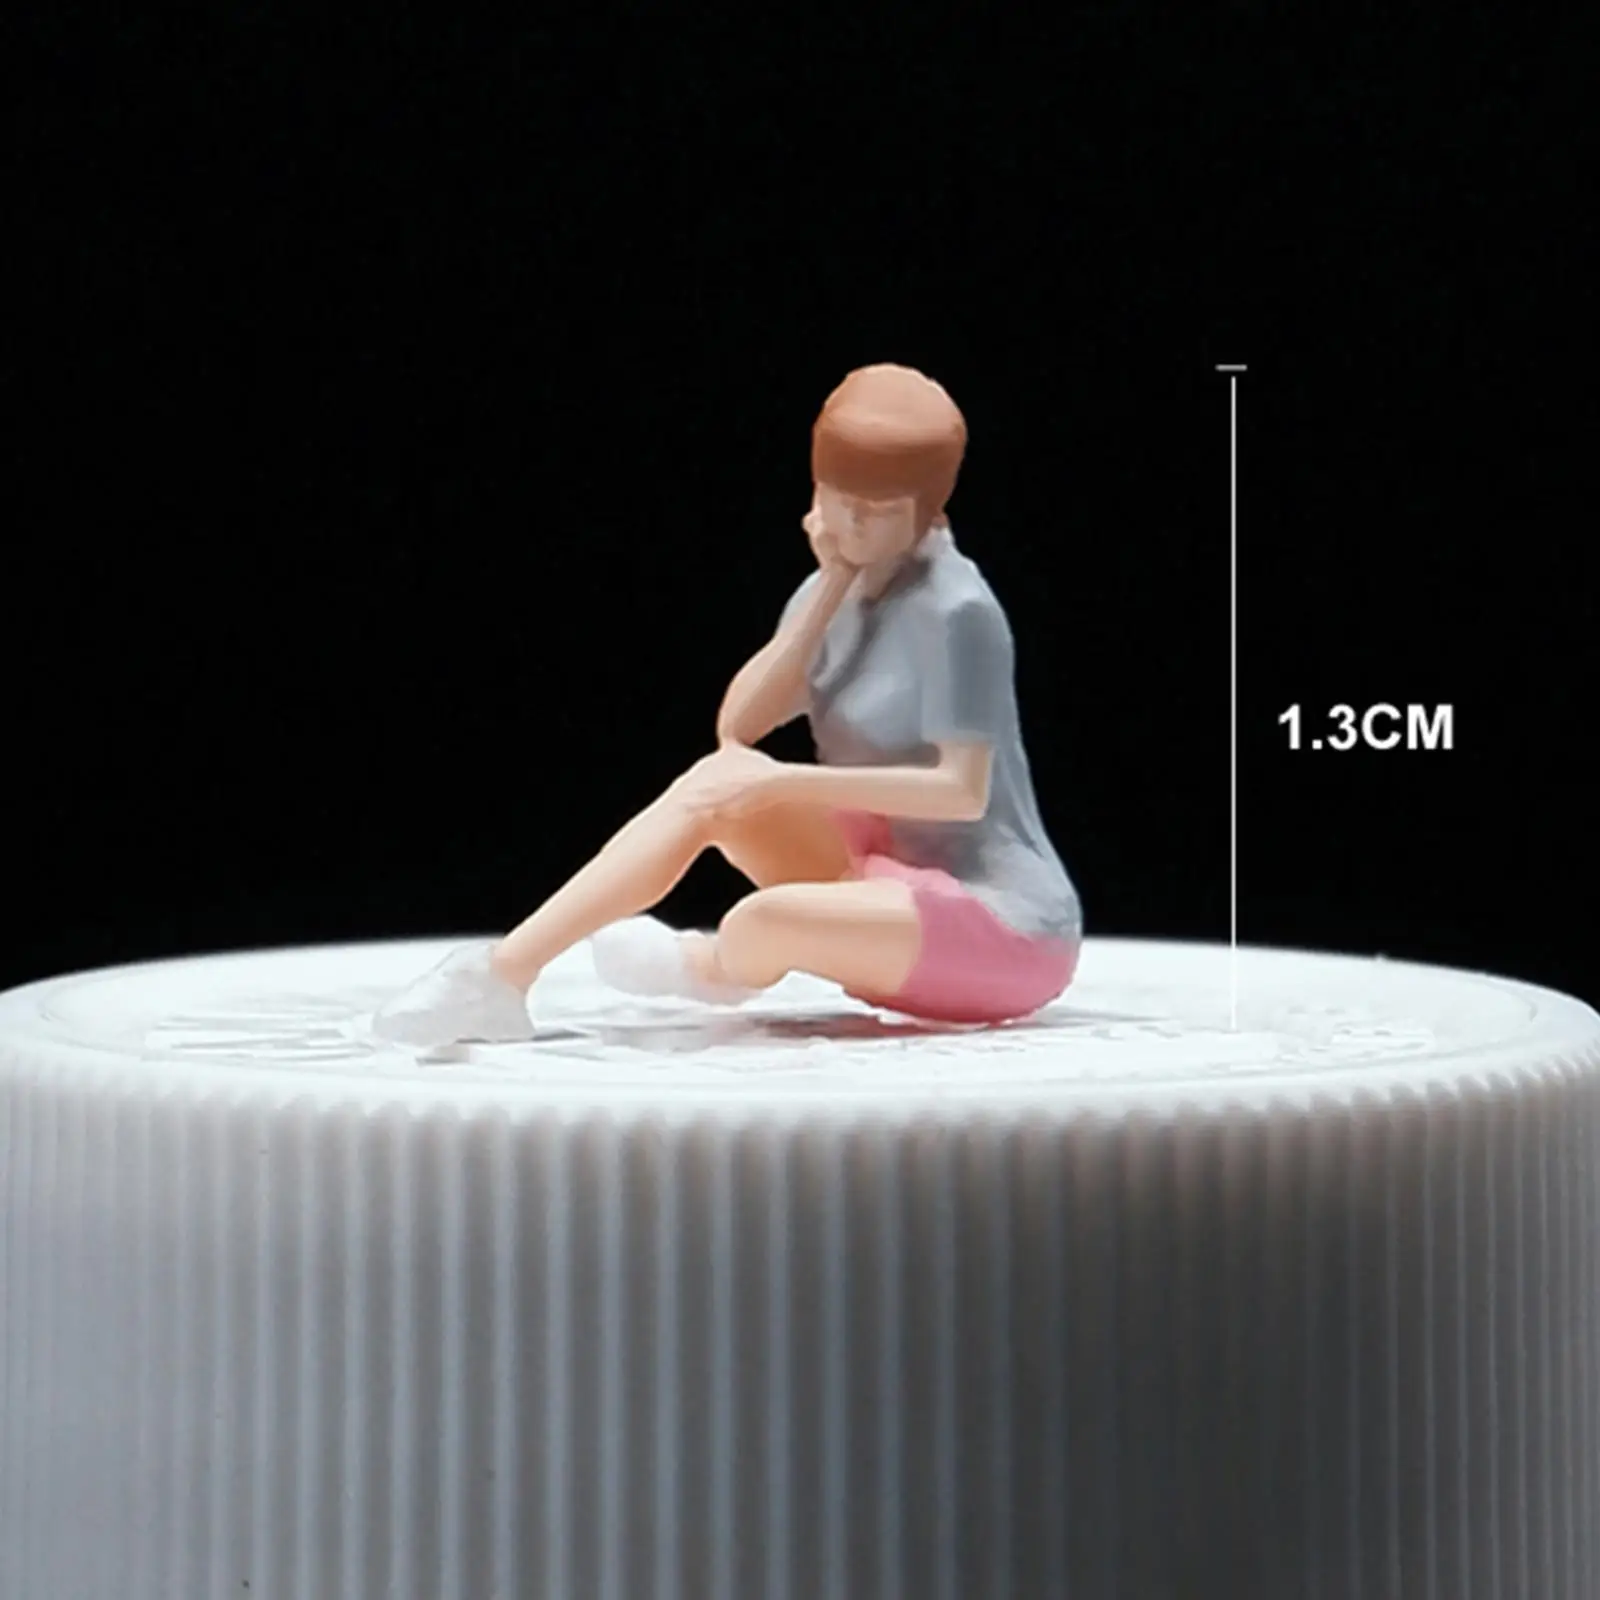 Miniature figure/64 Scale Dollhouse People for Building Model Dioramas